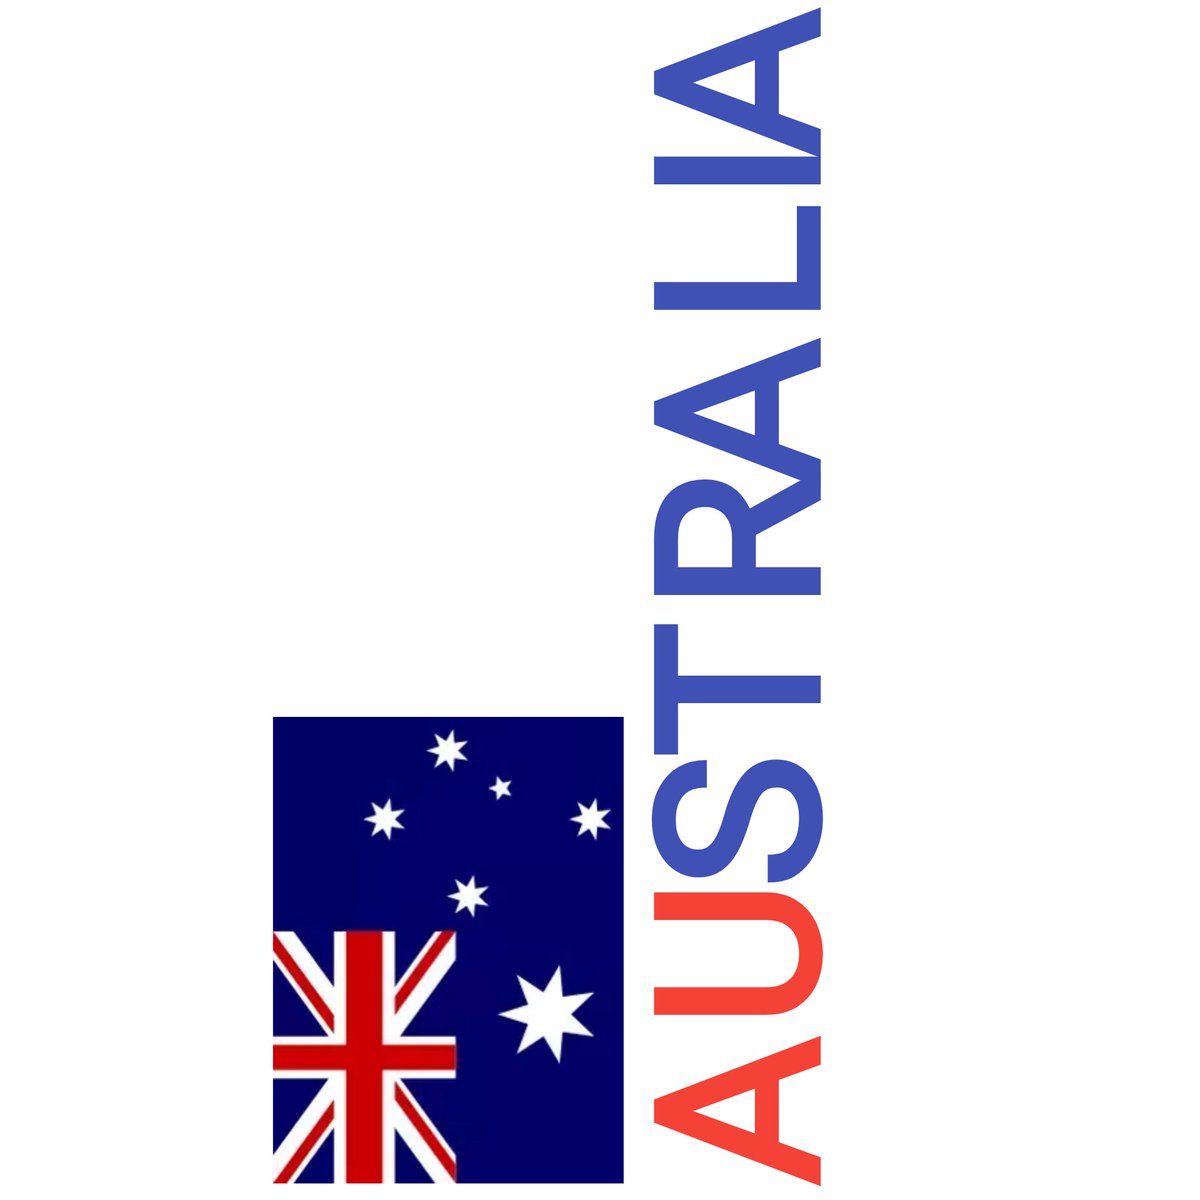 Australia Design Art.
#logo #logos #logodesign #logomaker #DESIGNART #design #designinspiration #Font #Designship2022 #designthinking #design #designjobs #DesignGrowth #designtwitter #Logodesigner